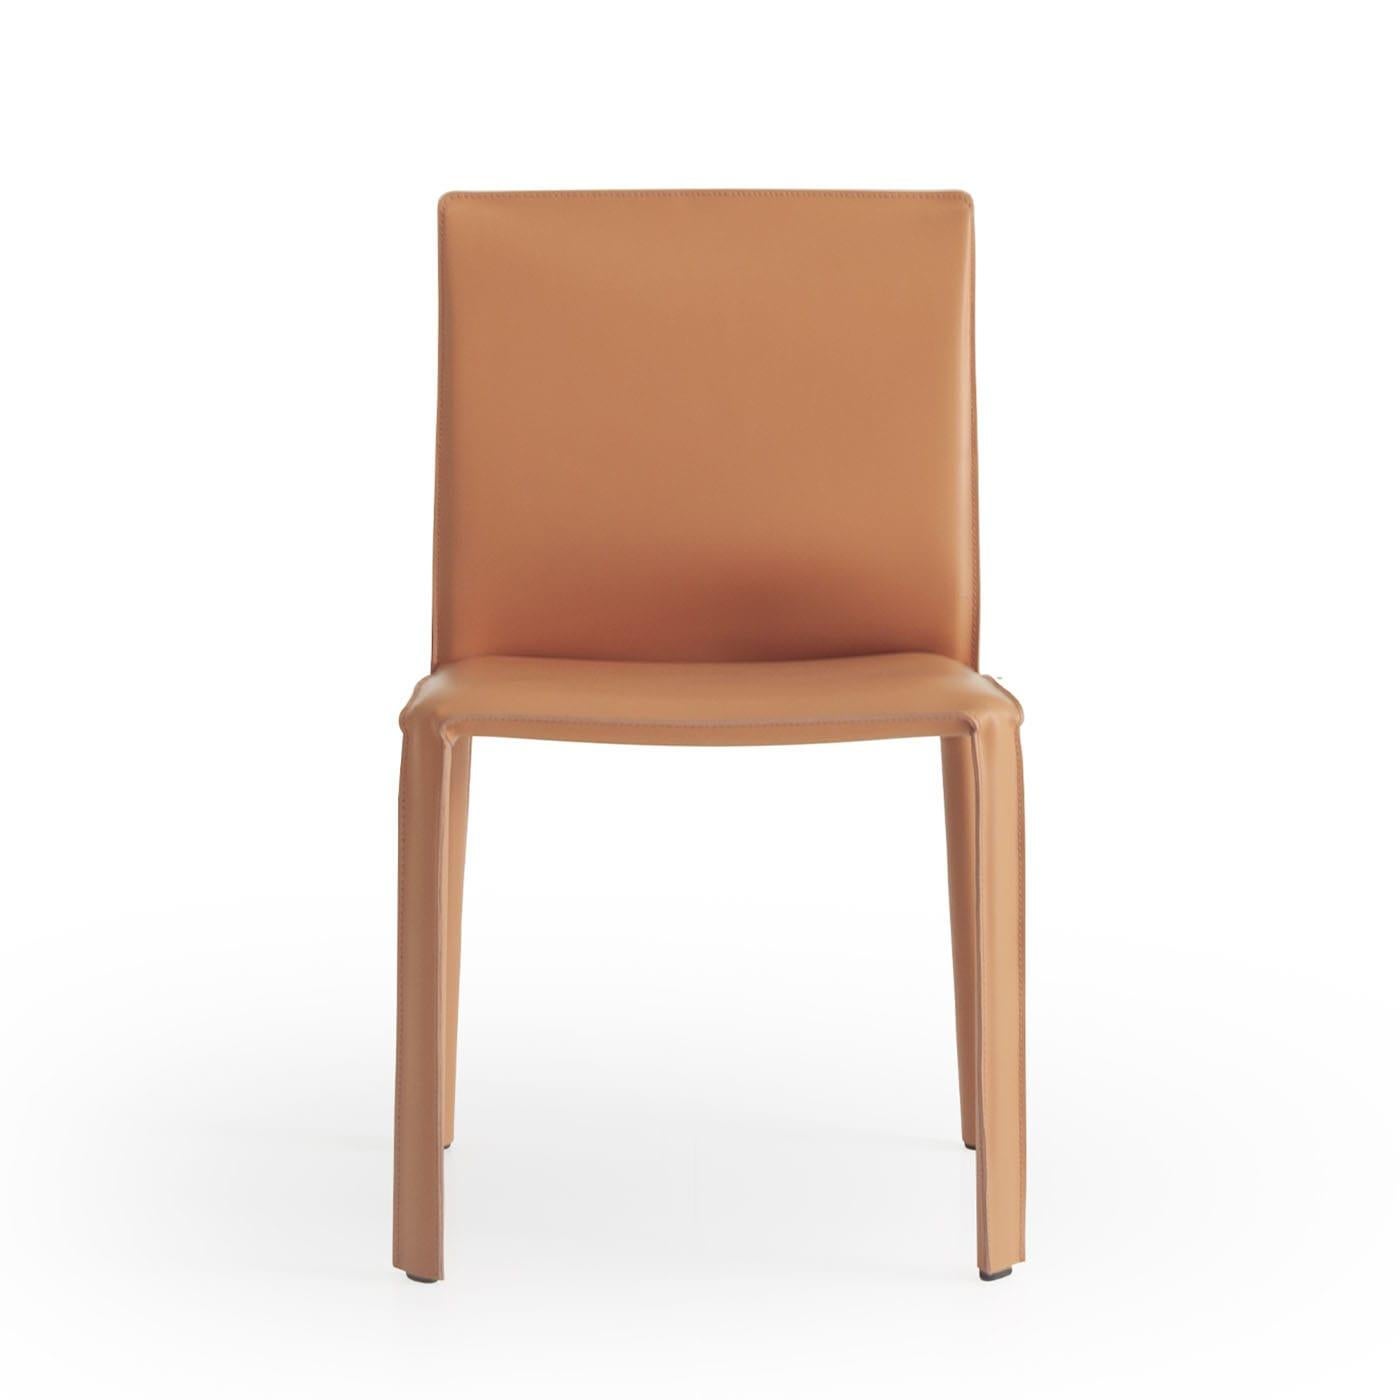 Contemporary Jumpsuite Cognac-Toned Leather Chair For Sale